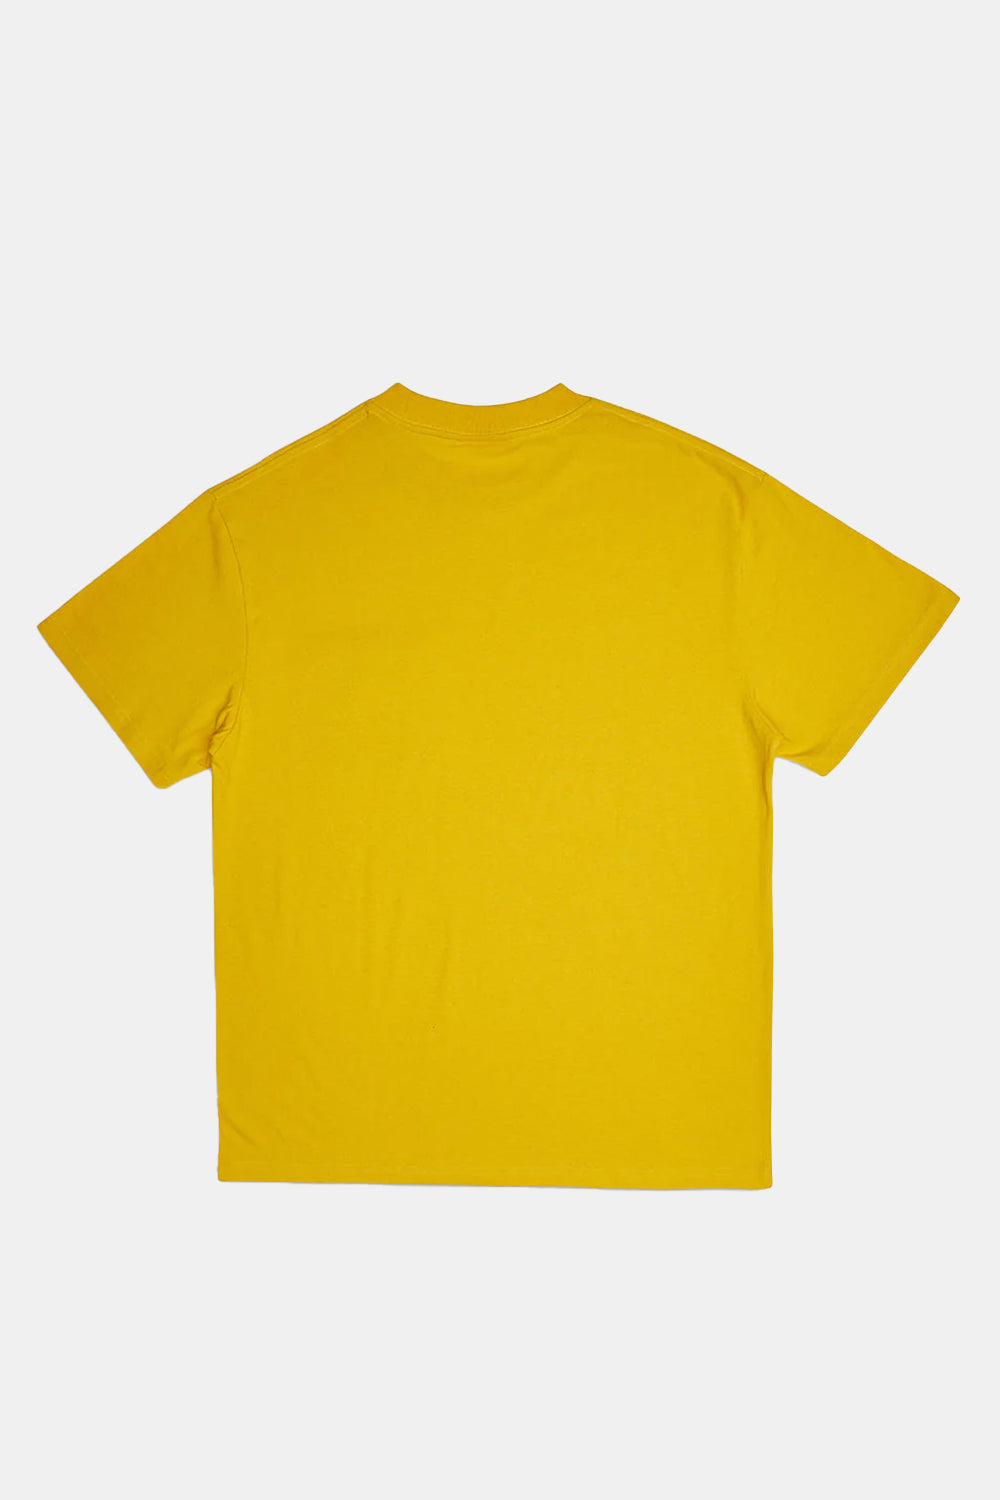 Deus Tango Pocket T-Shirt (Super Lemon) | Number Six